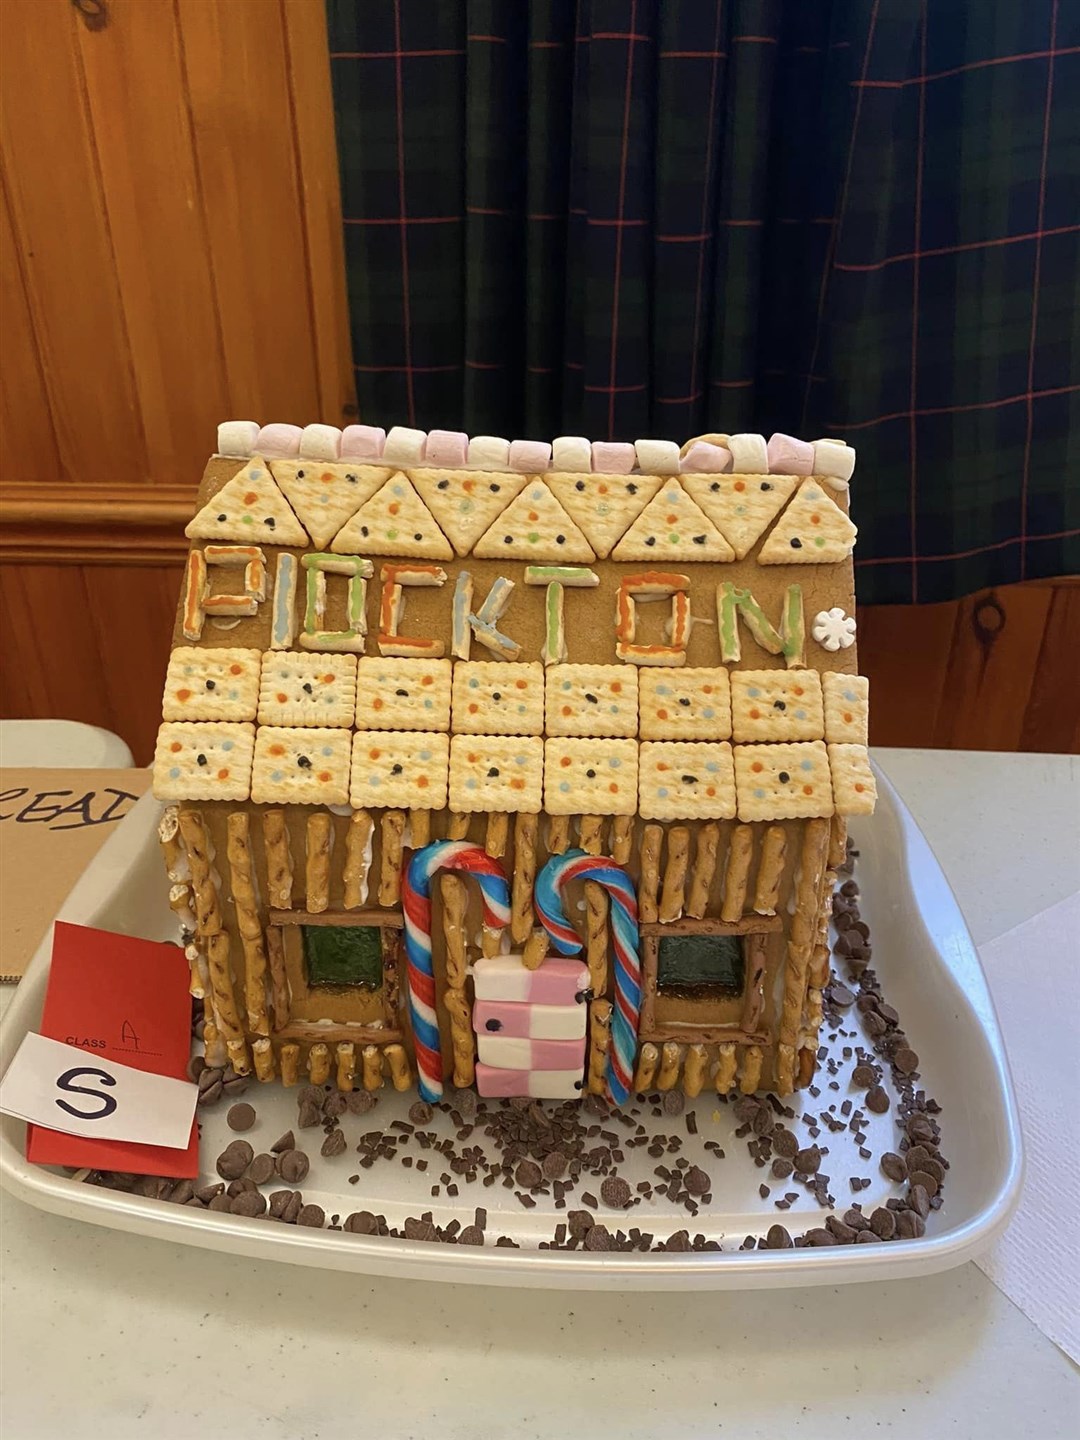 Ewan Cameron won 2nd place for his Plockton gingerbread house.